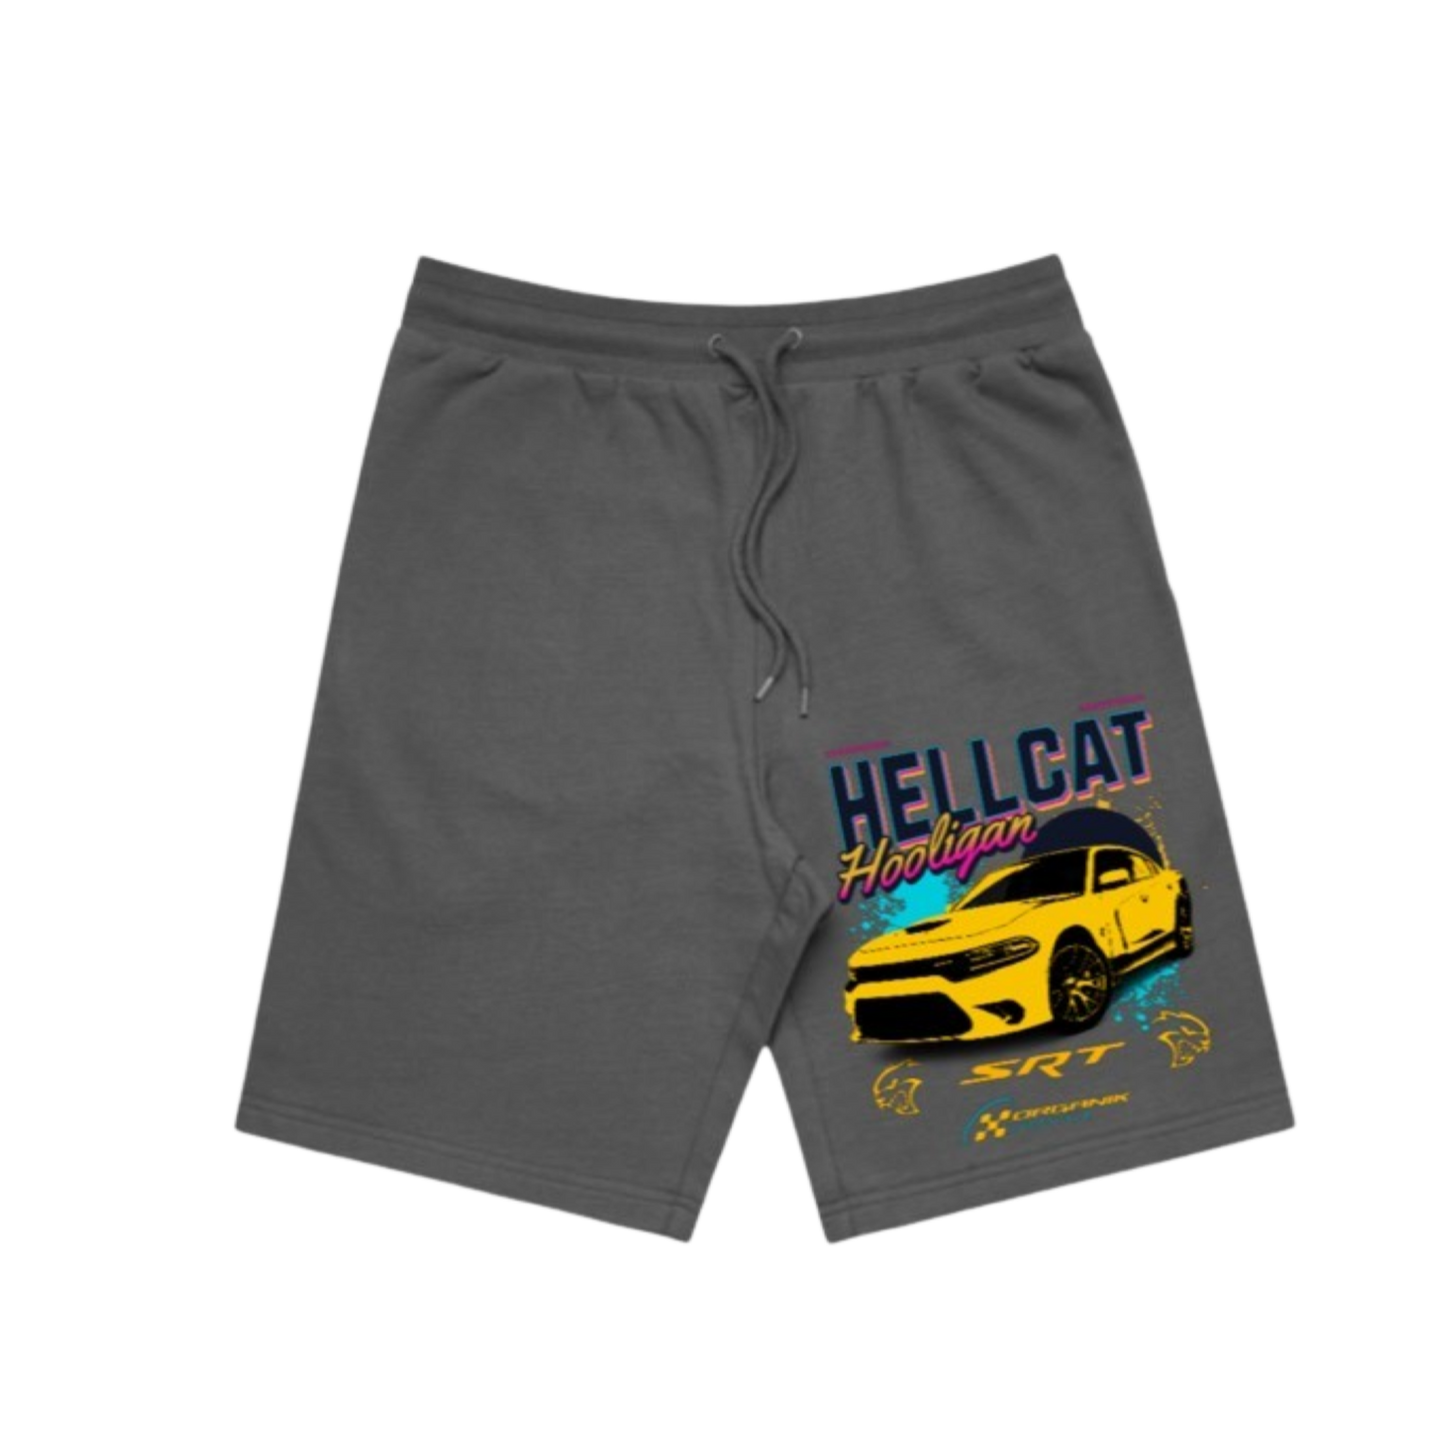 Organik Lyfestyle - Hellcat Hooligan Shorts - Grey